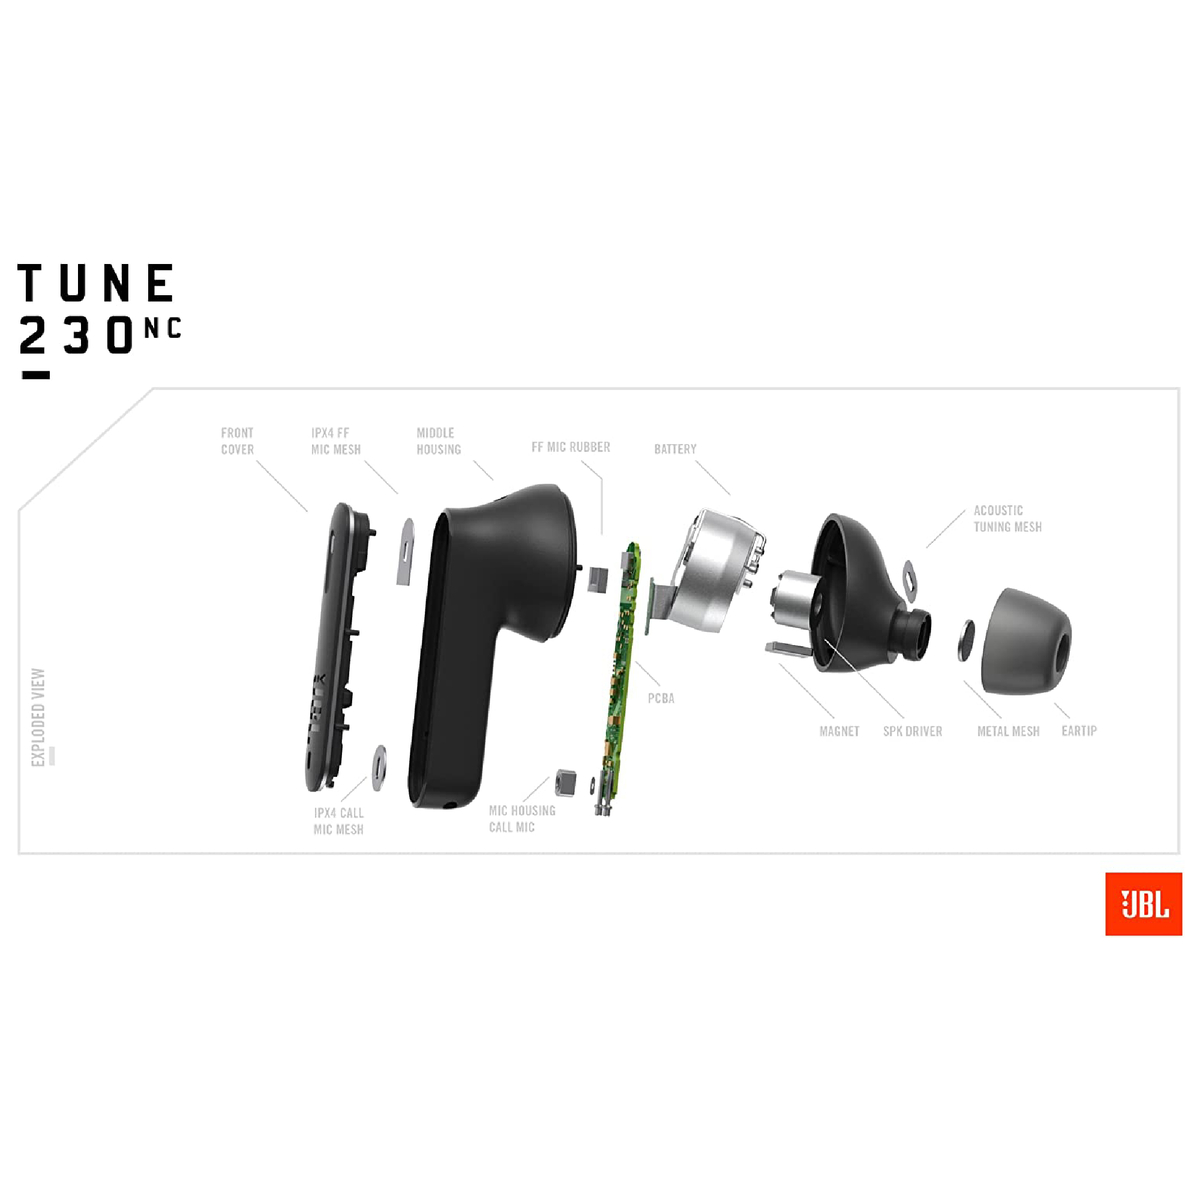 JBL True Wireless Noise Cancelling Earbuds, Black, TUNE230NC